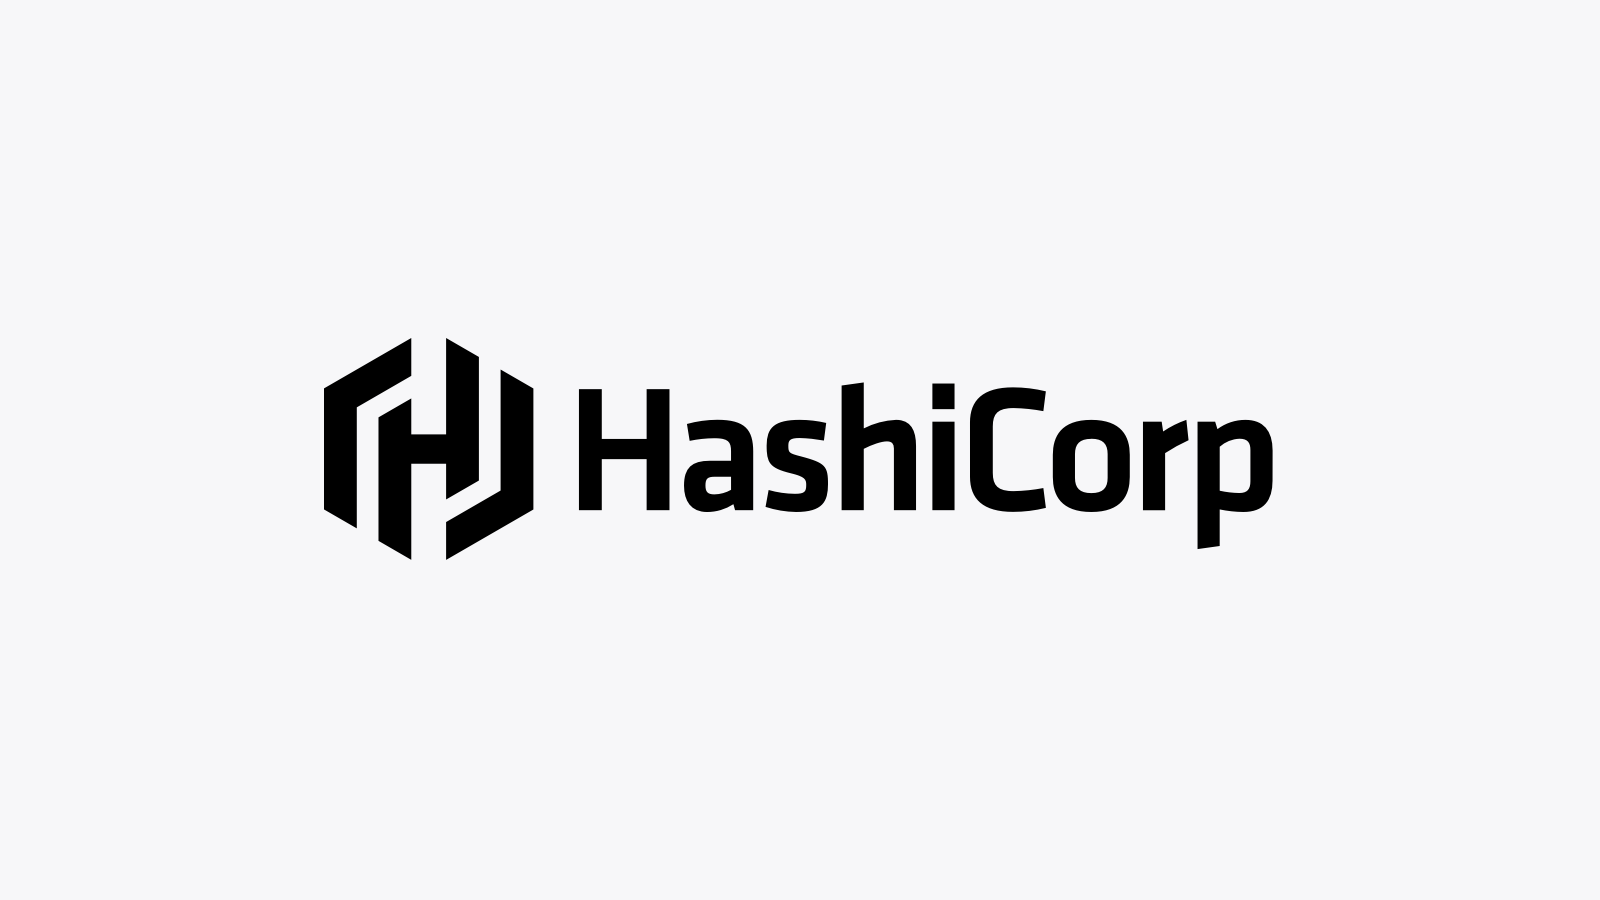 HashiCorp - The multi-million player platform